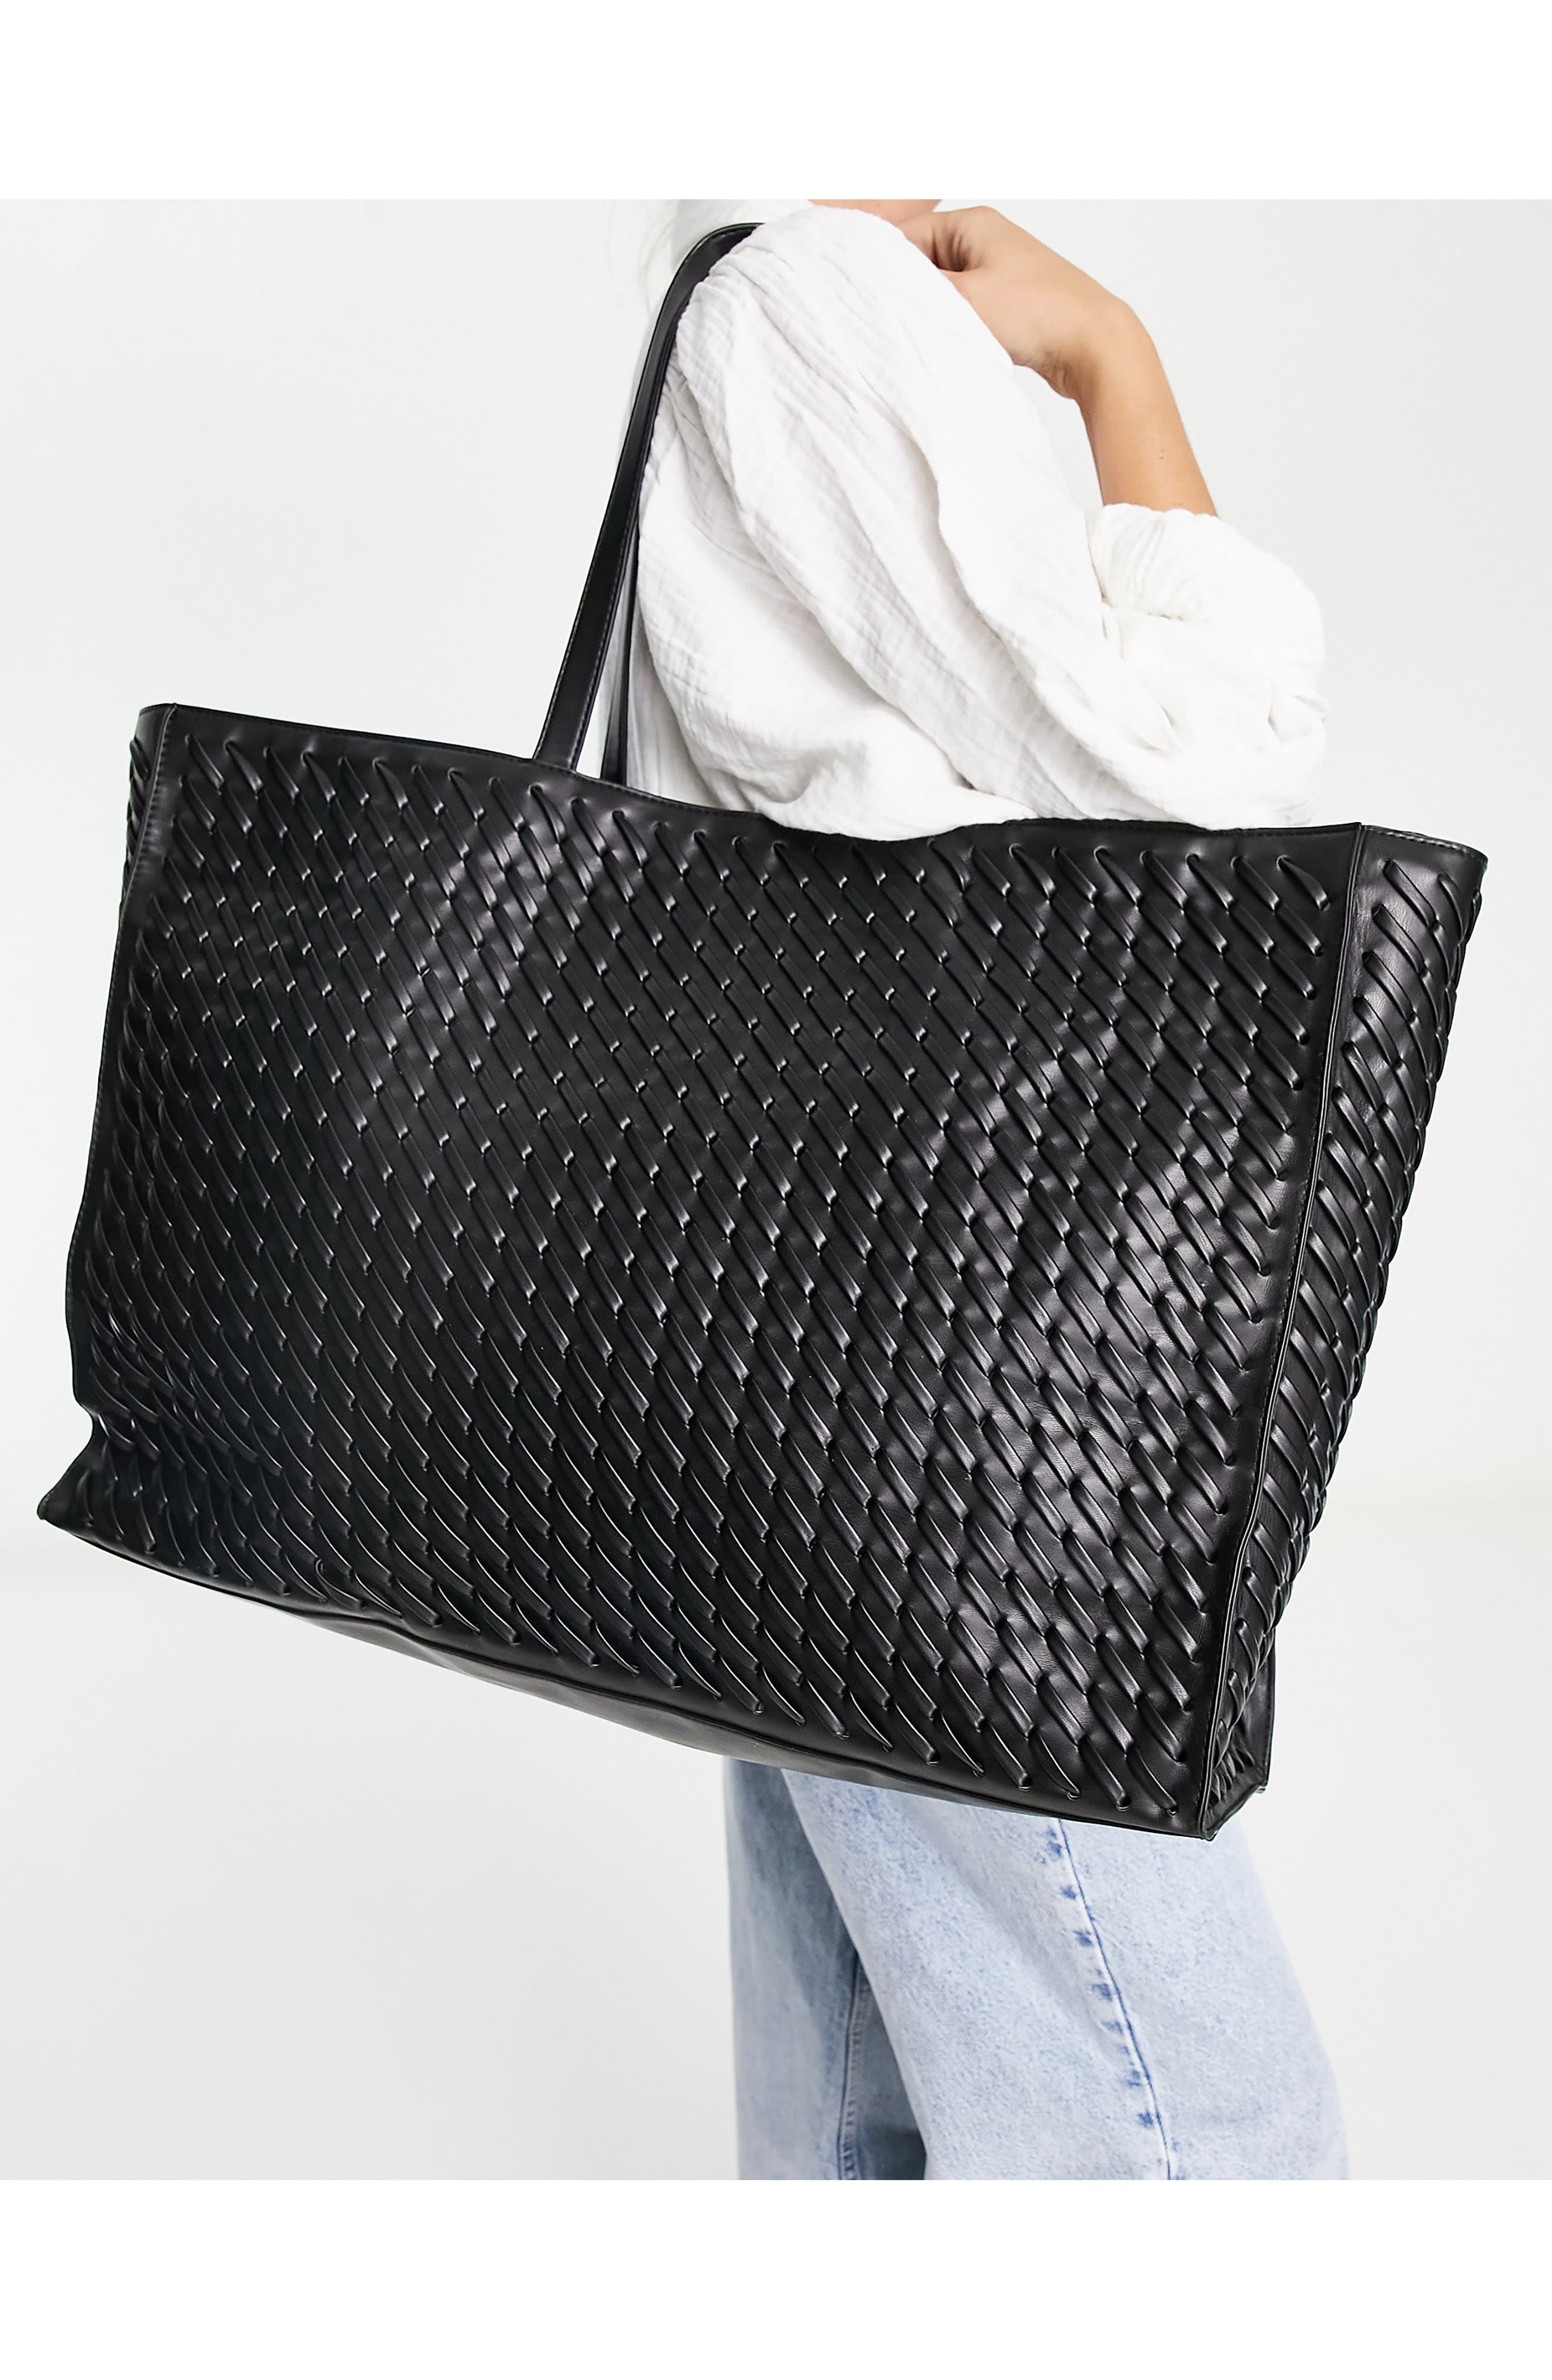 New Womens Tote Handbags Ladies Fashion Grab Shoulder Bags Faux Leather Designer 